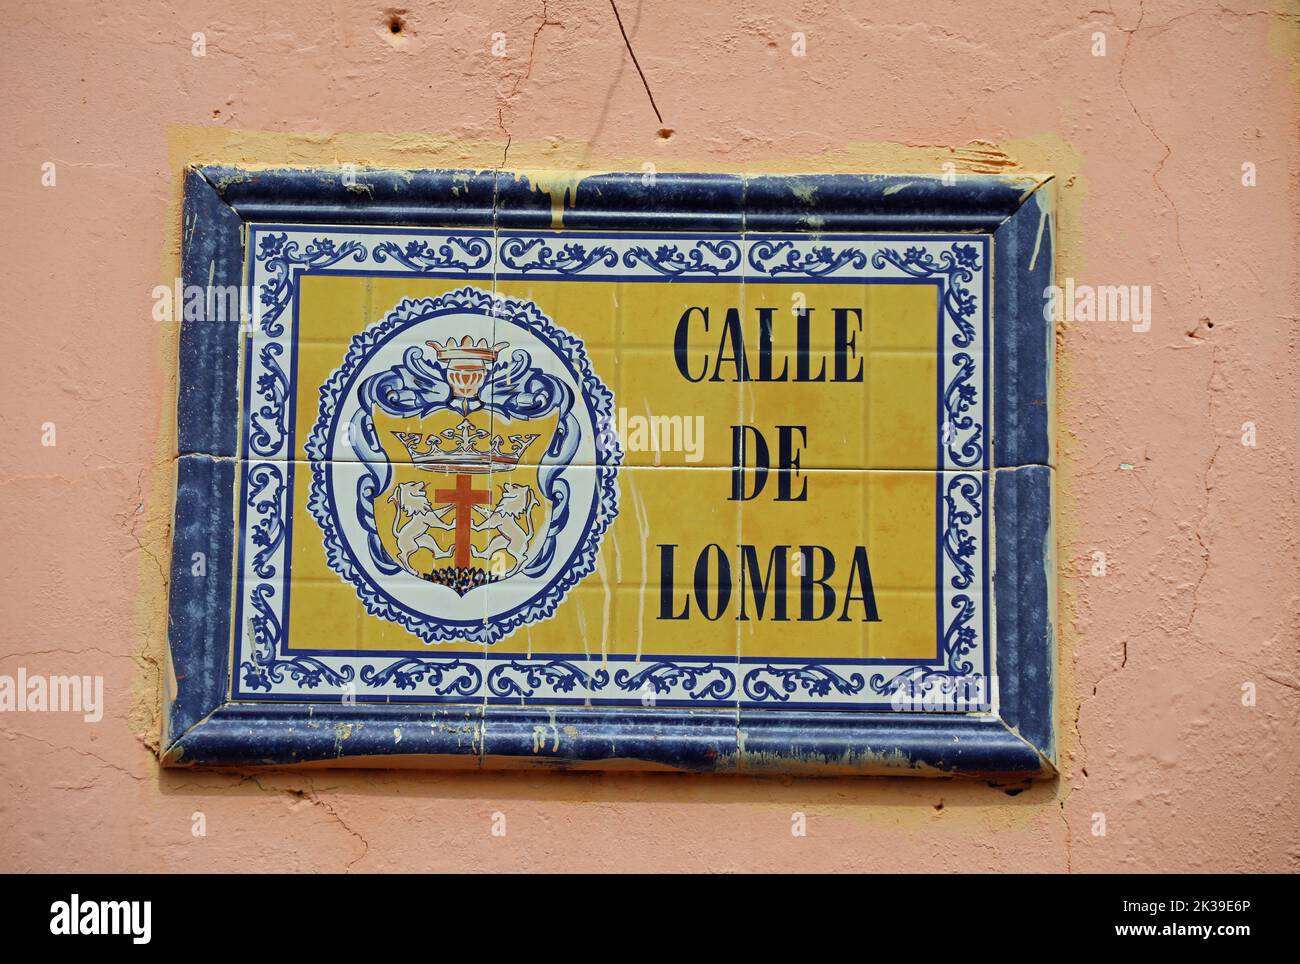 Calle de Lomba in Cartagena Stock Photo